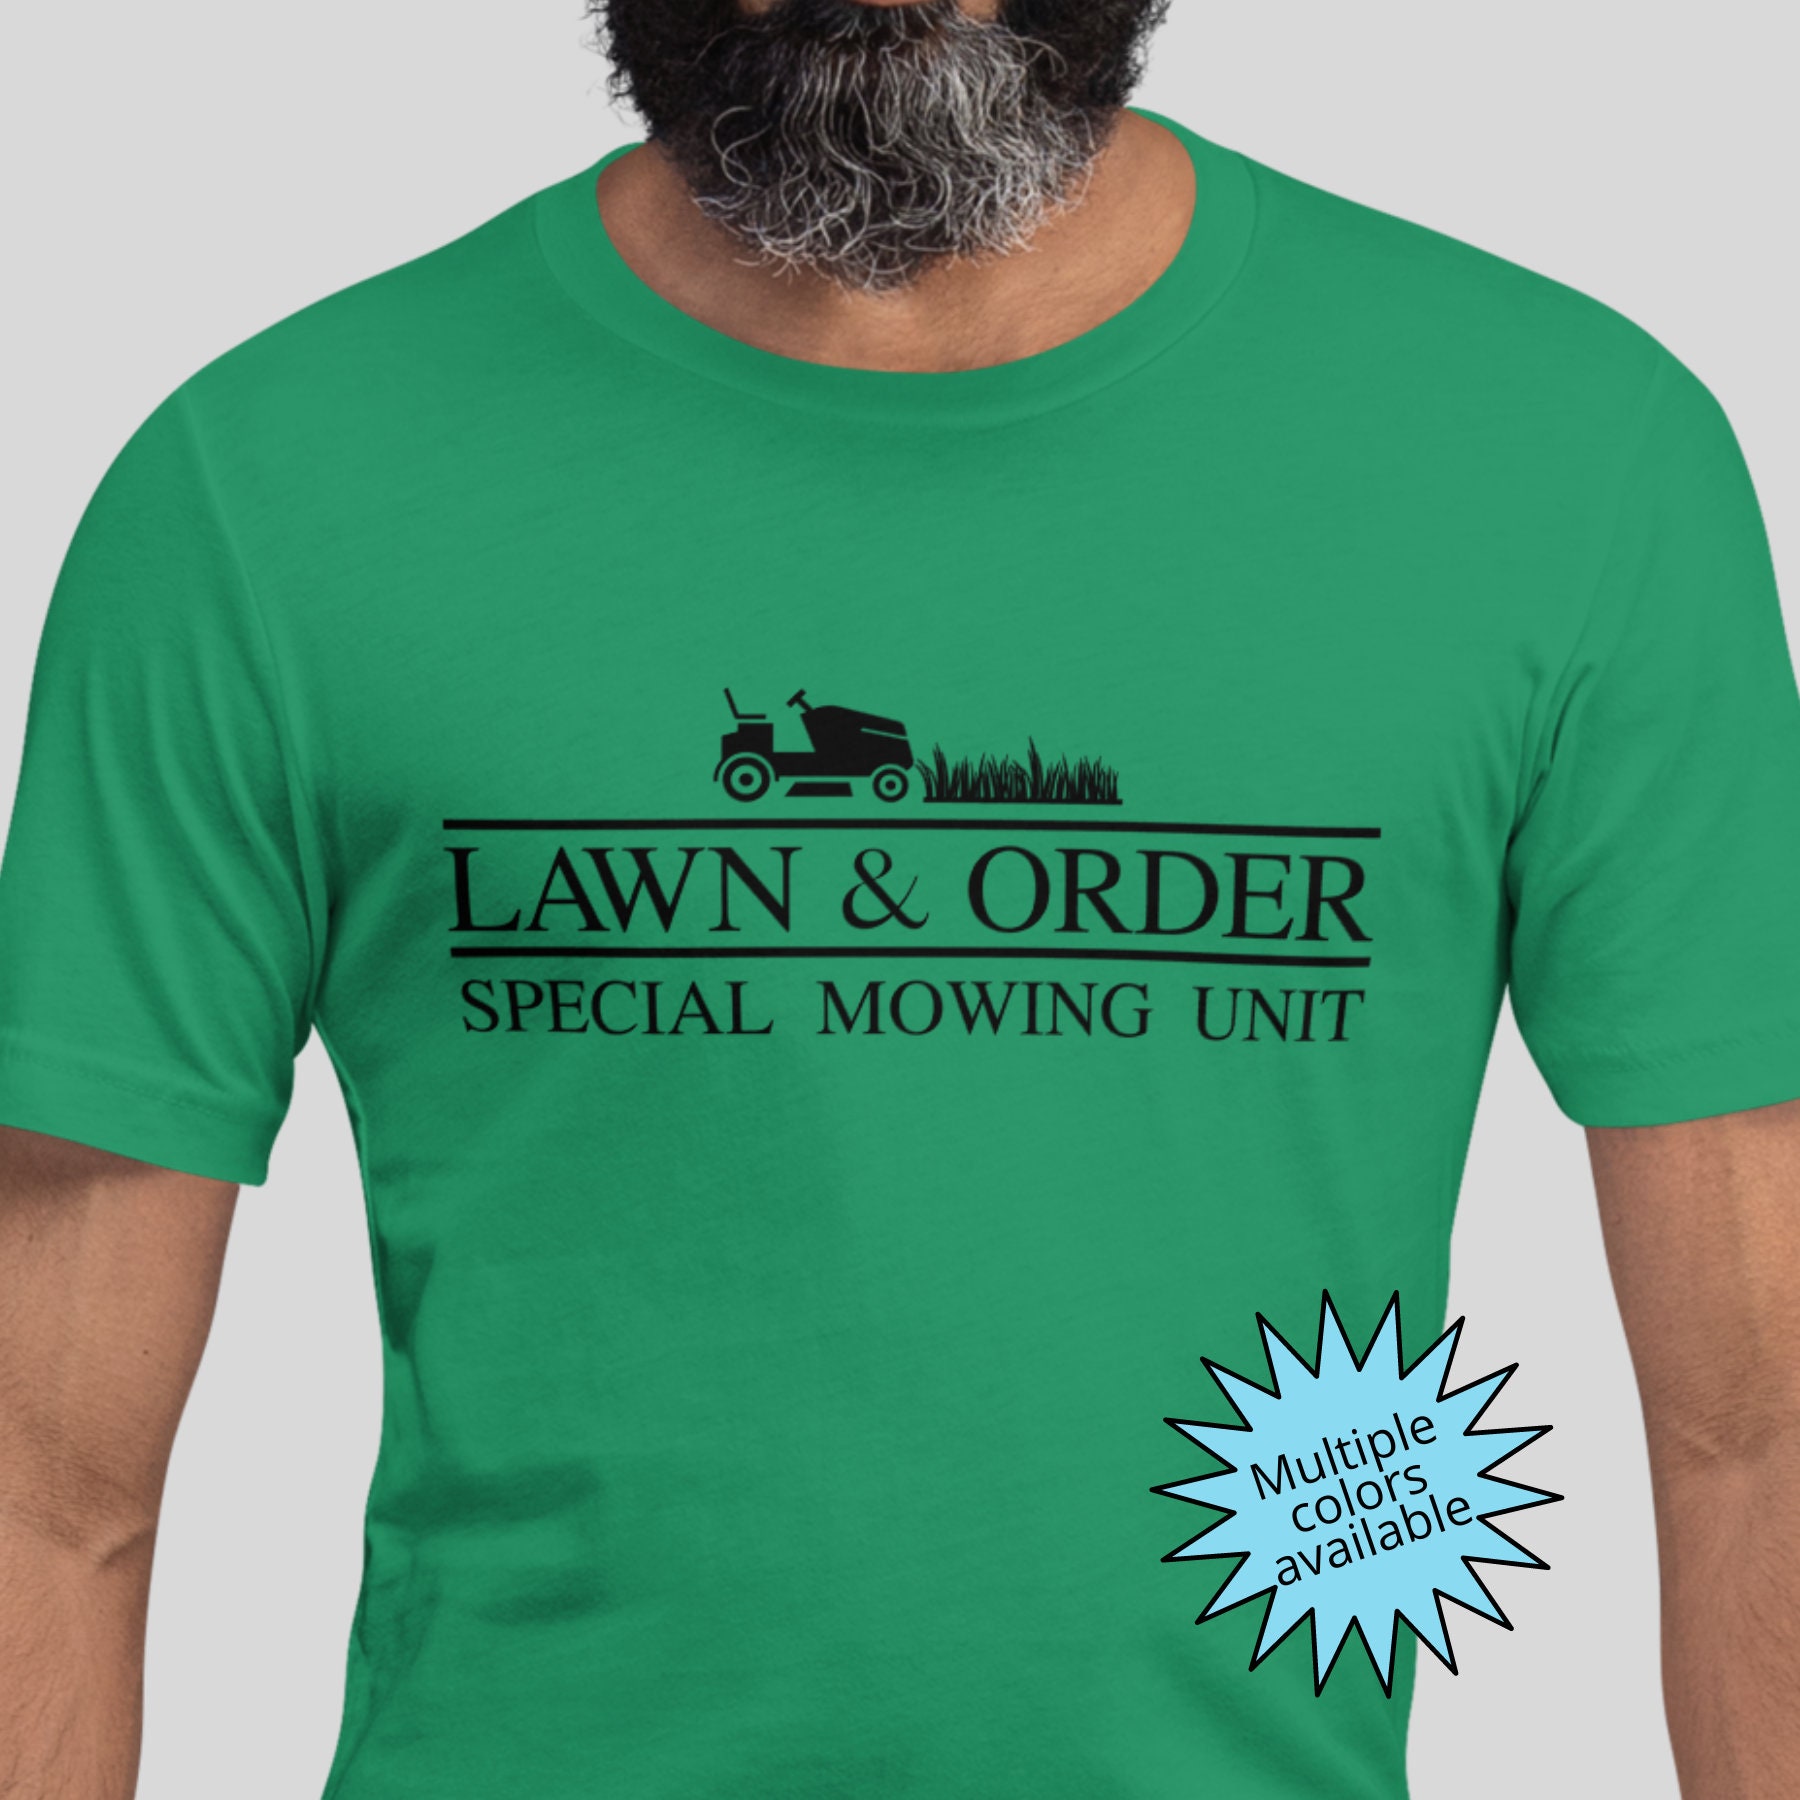 Lawn & Order - Special Mowing Unit T-Shirt, Yard Work Landscaping Top,Lawnwhisperer Shirt,Funny Gardening Tee,Lawn Mower Caretaker Gift